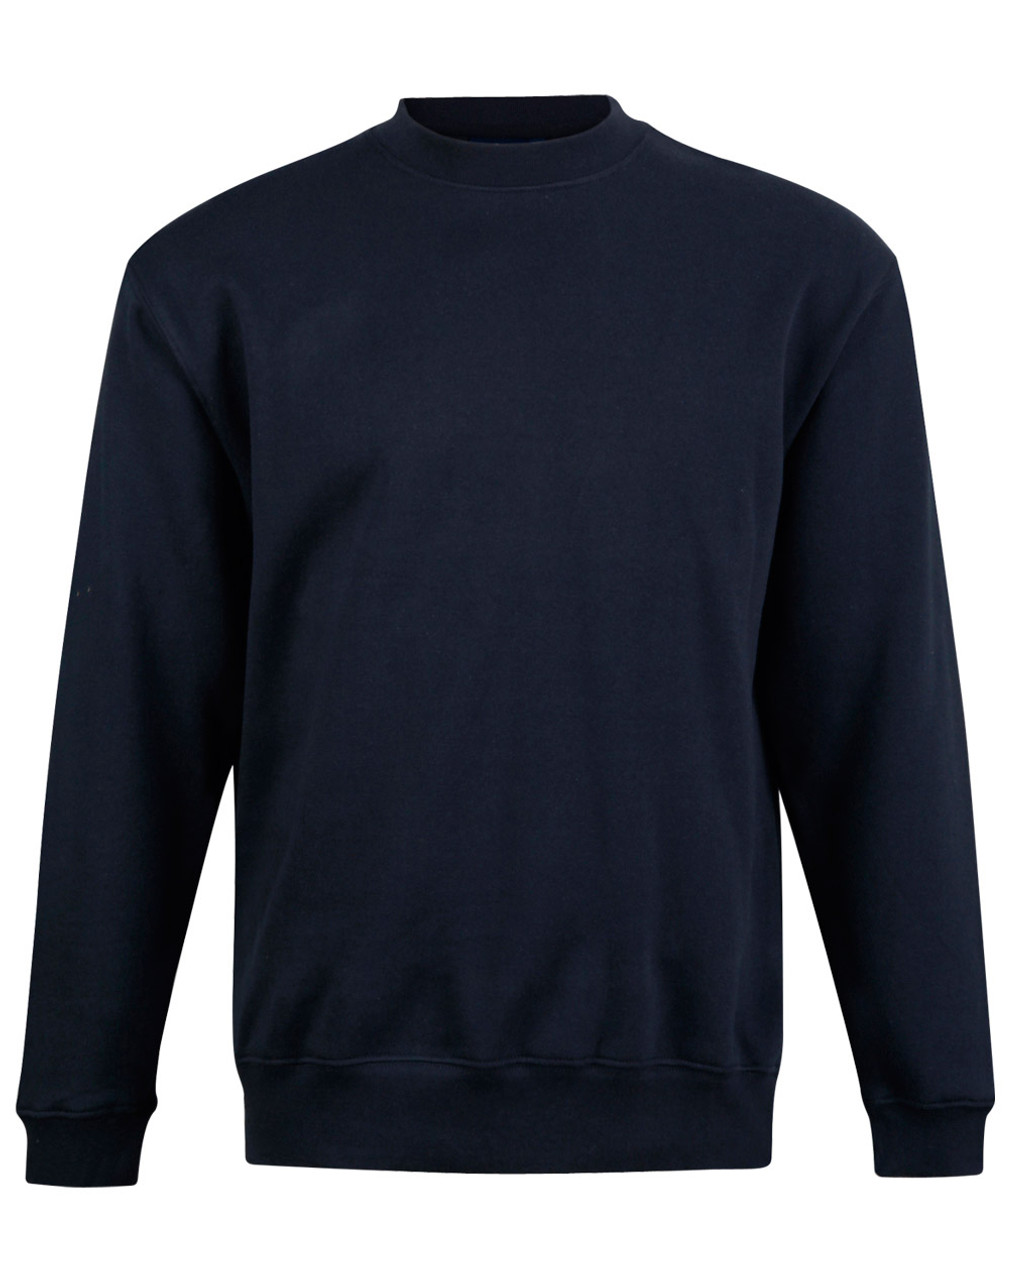 Sloppy joes plain cotton-rich sweater | Plus Size Jumper Pullovers Online